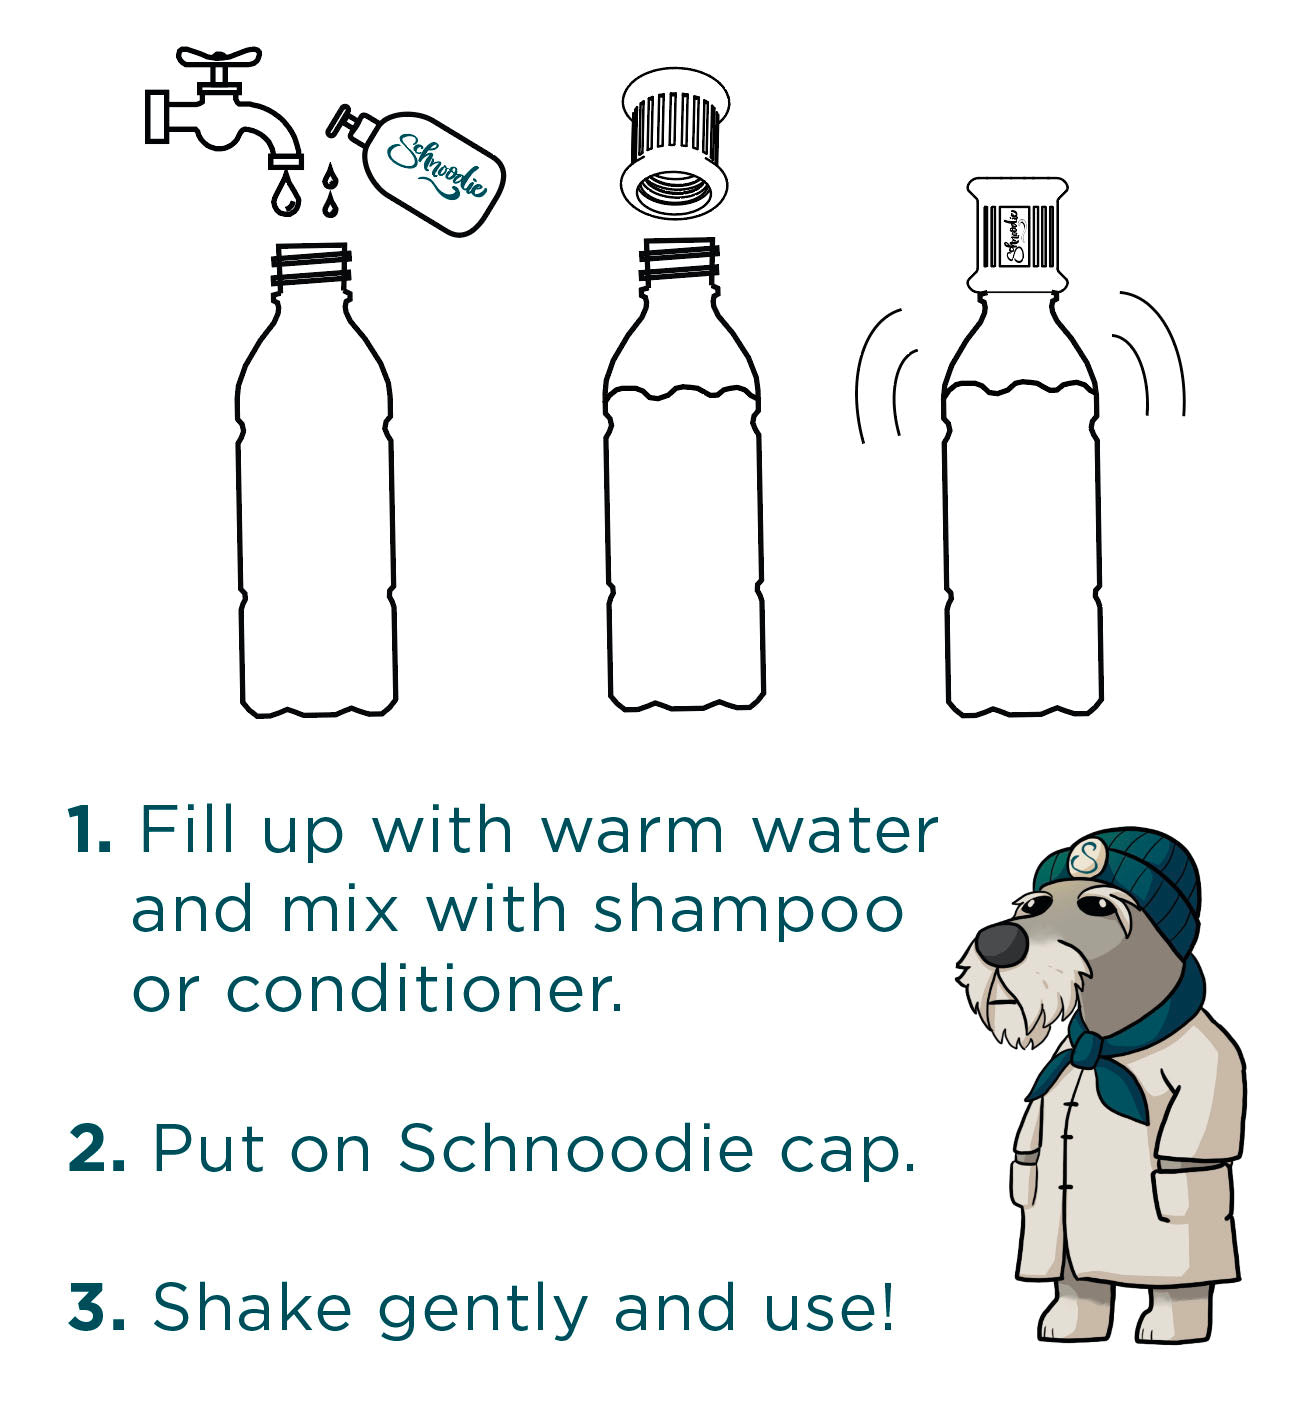 Shower cap - smart cap for pet bottles